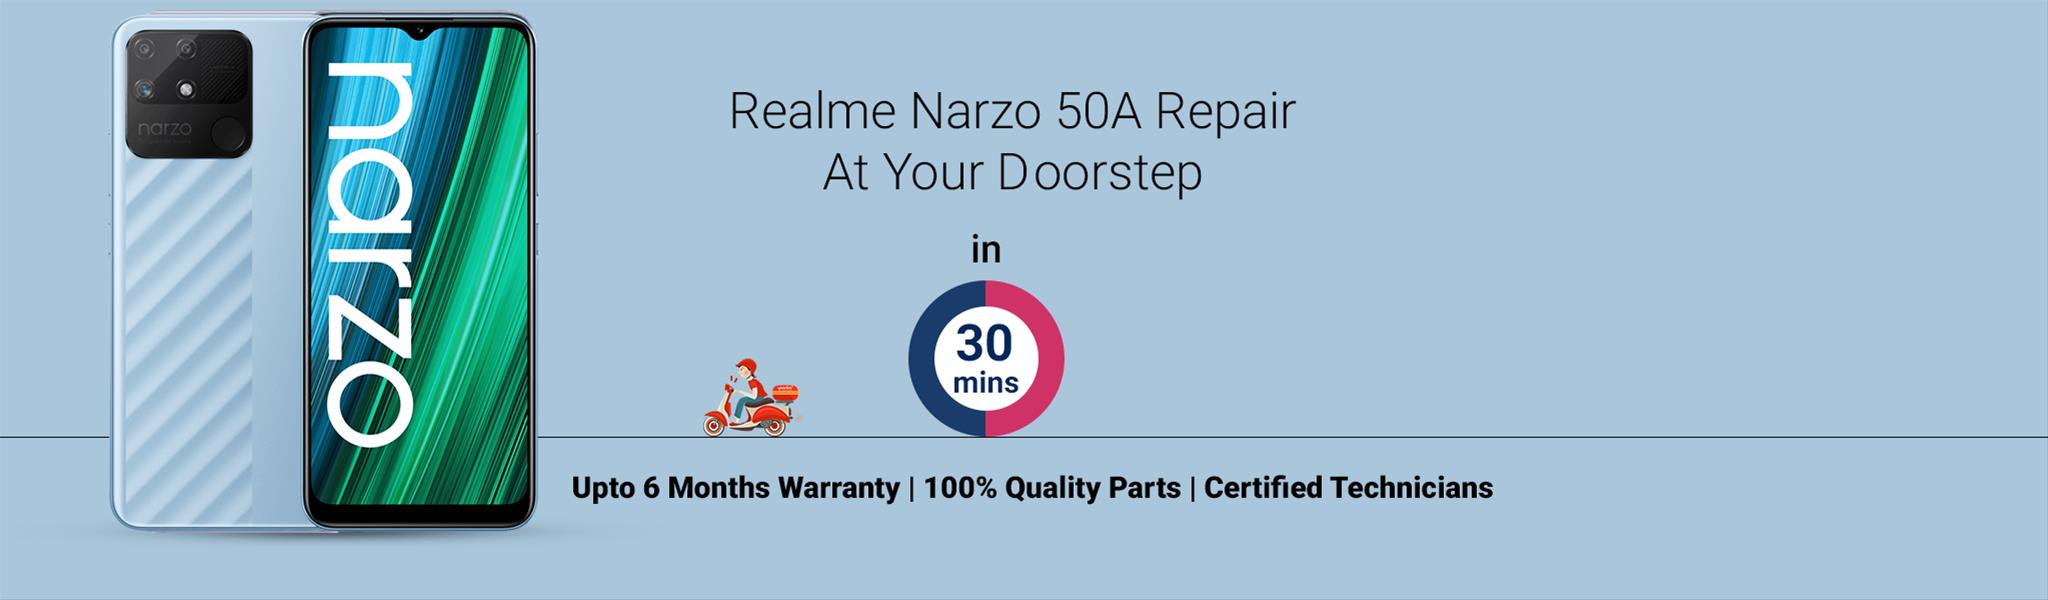 realme-narzo-50a-repair.png